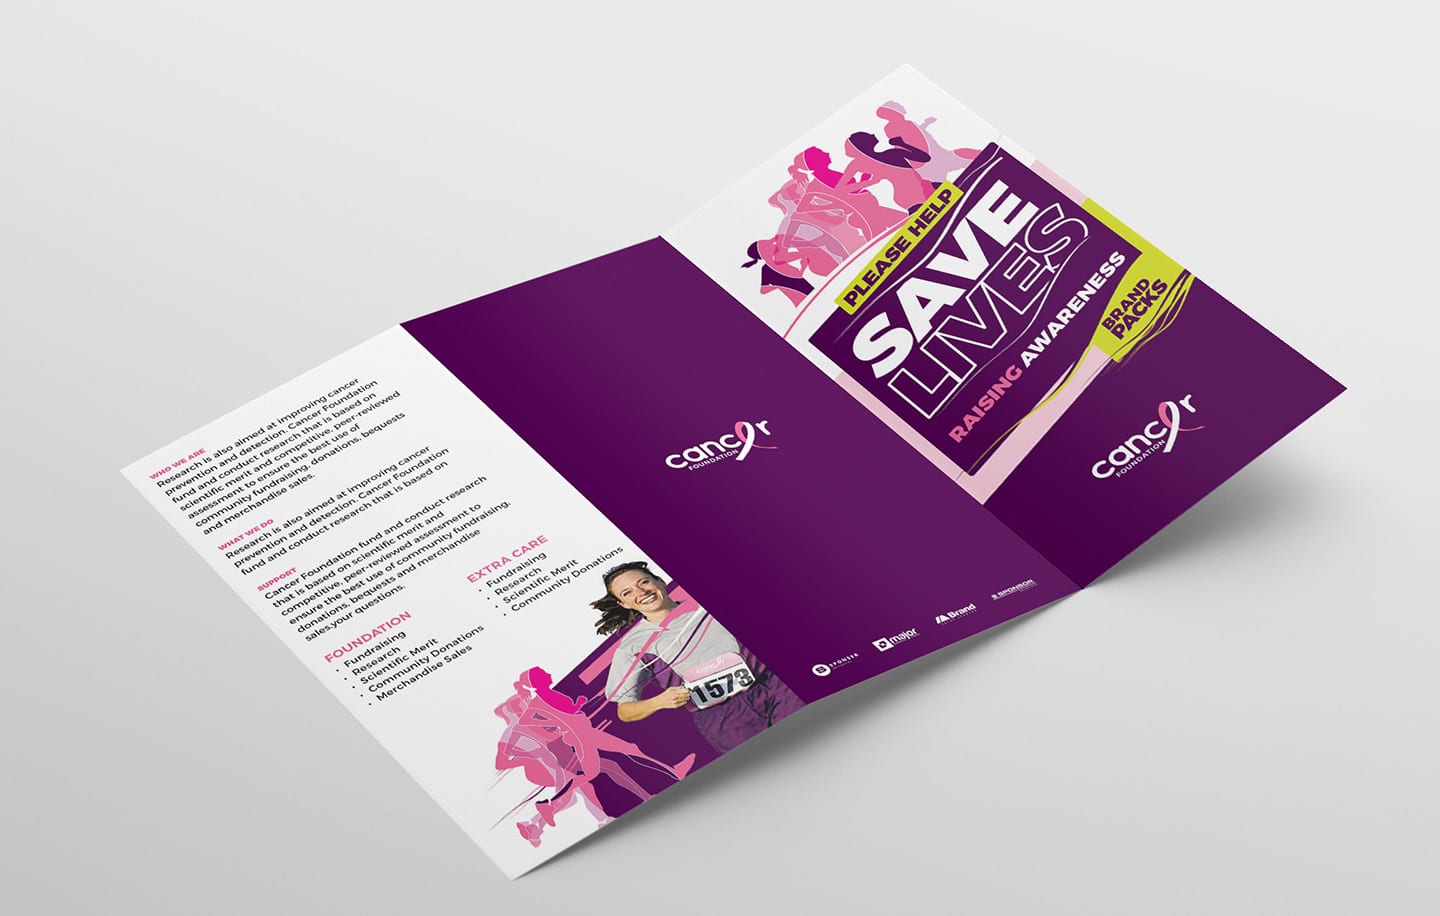 Cancer Charity Fun Run Tri-Fold Brochure Template in PSD ...